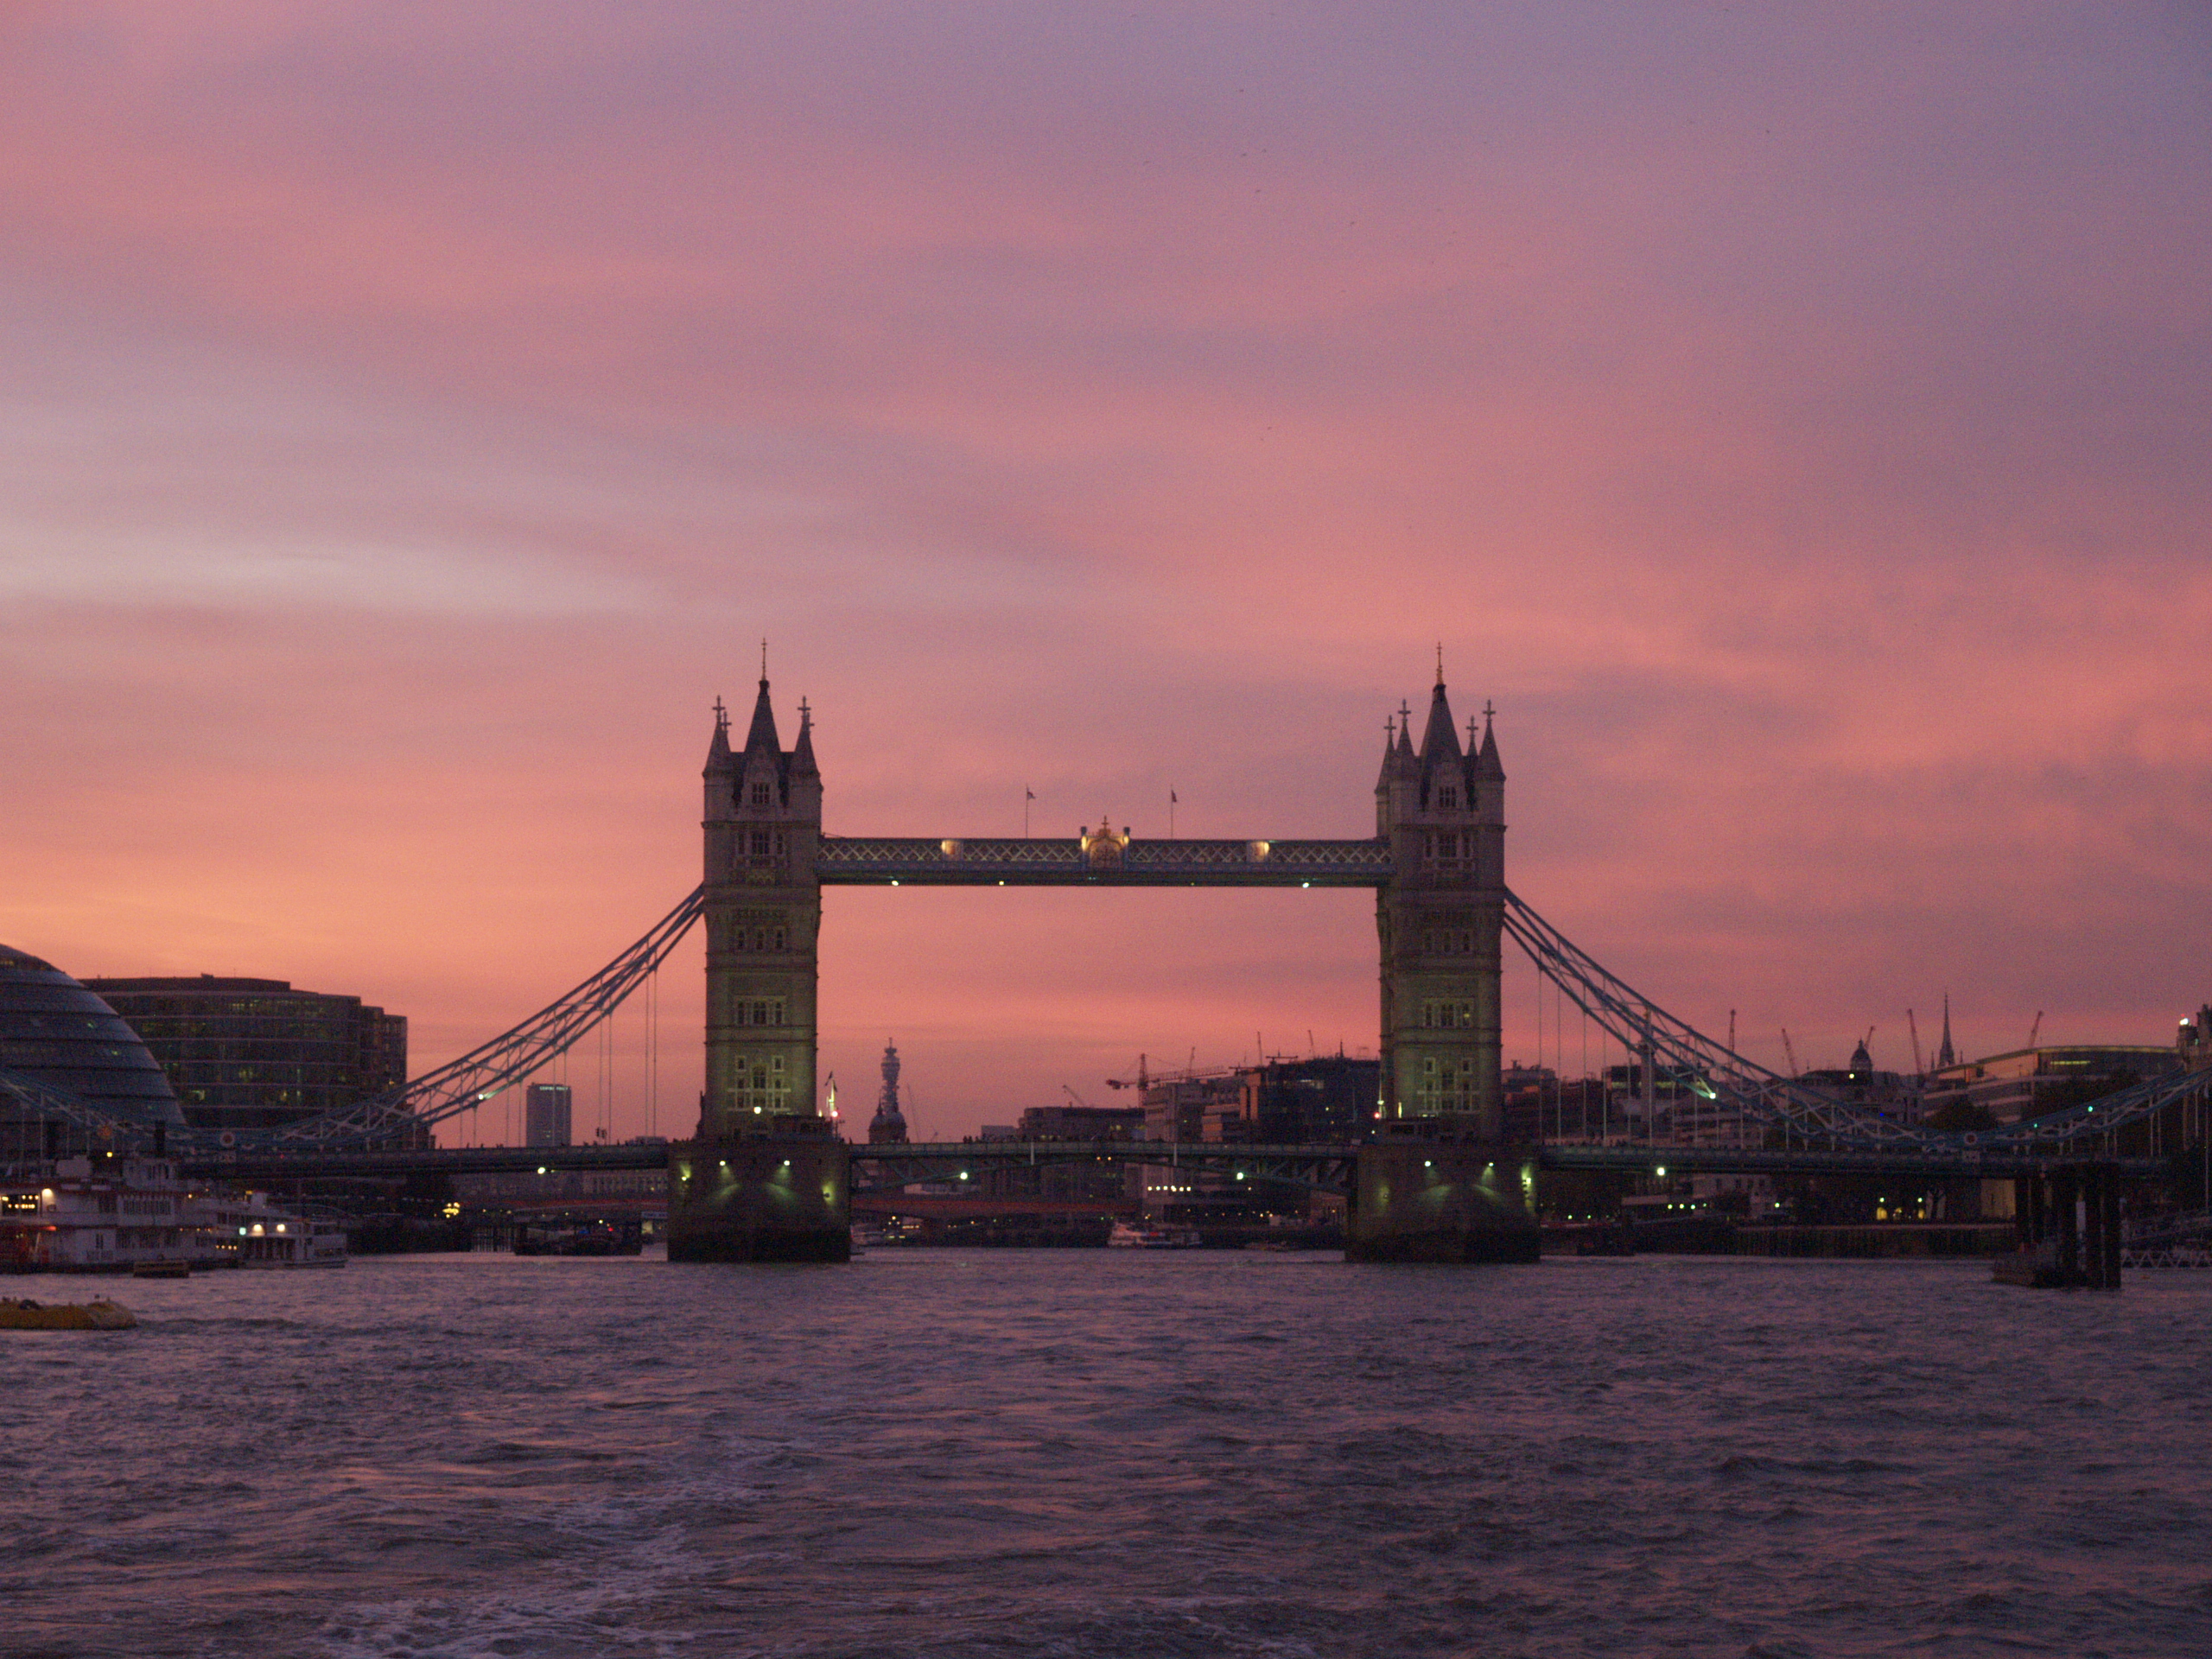 The Tower Bridge at sunset #3